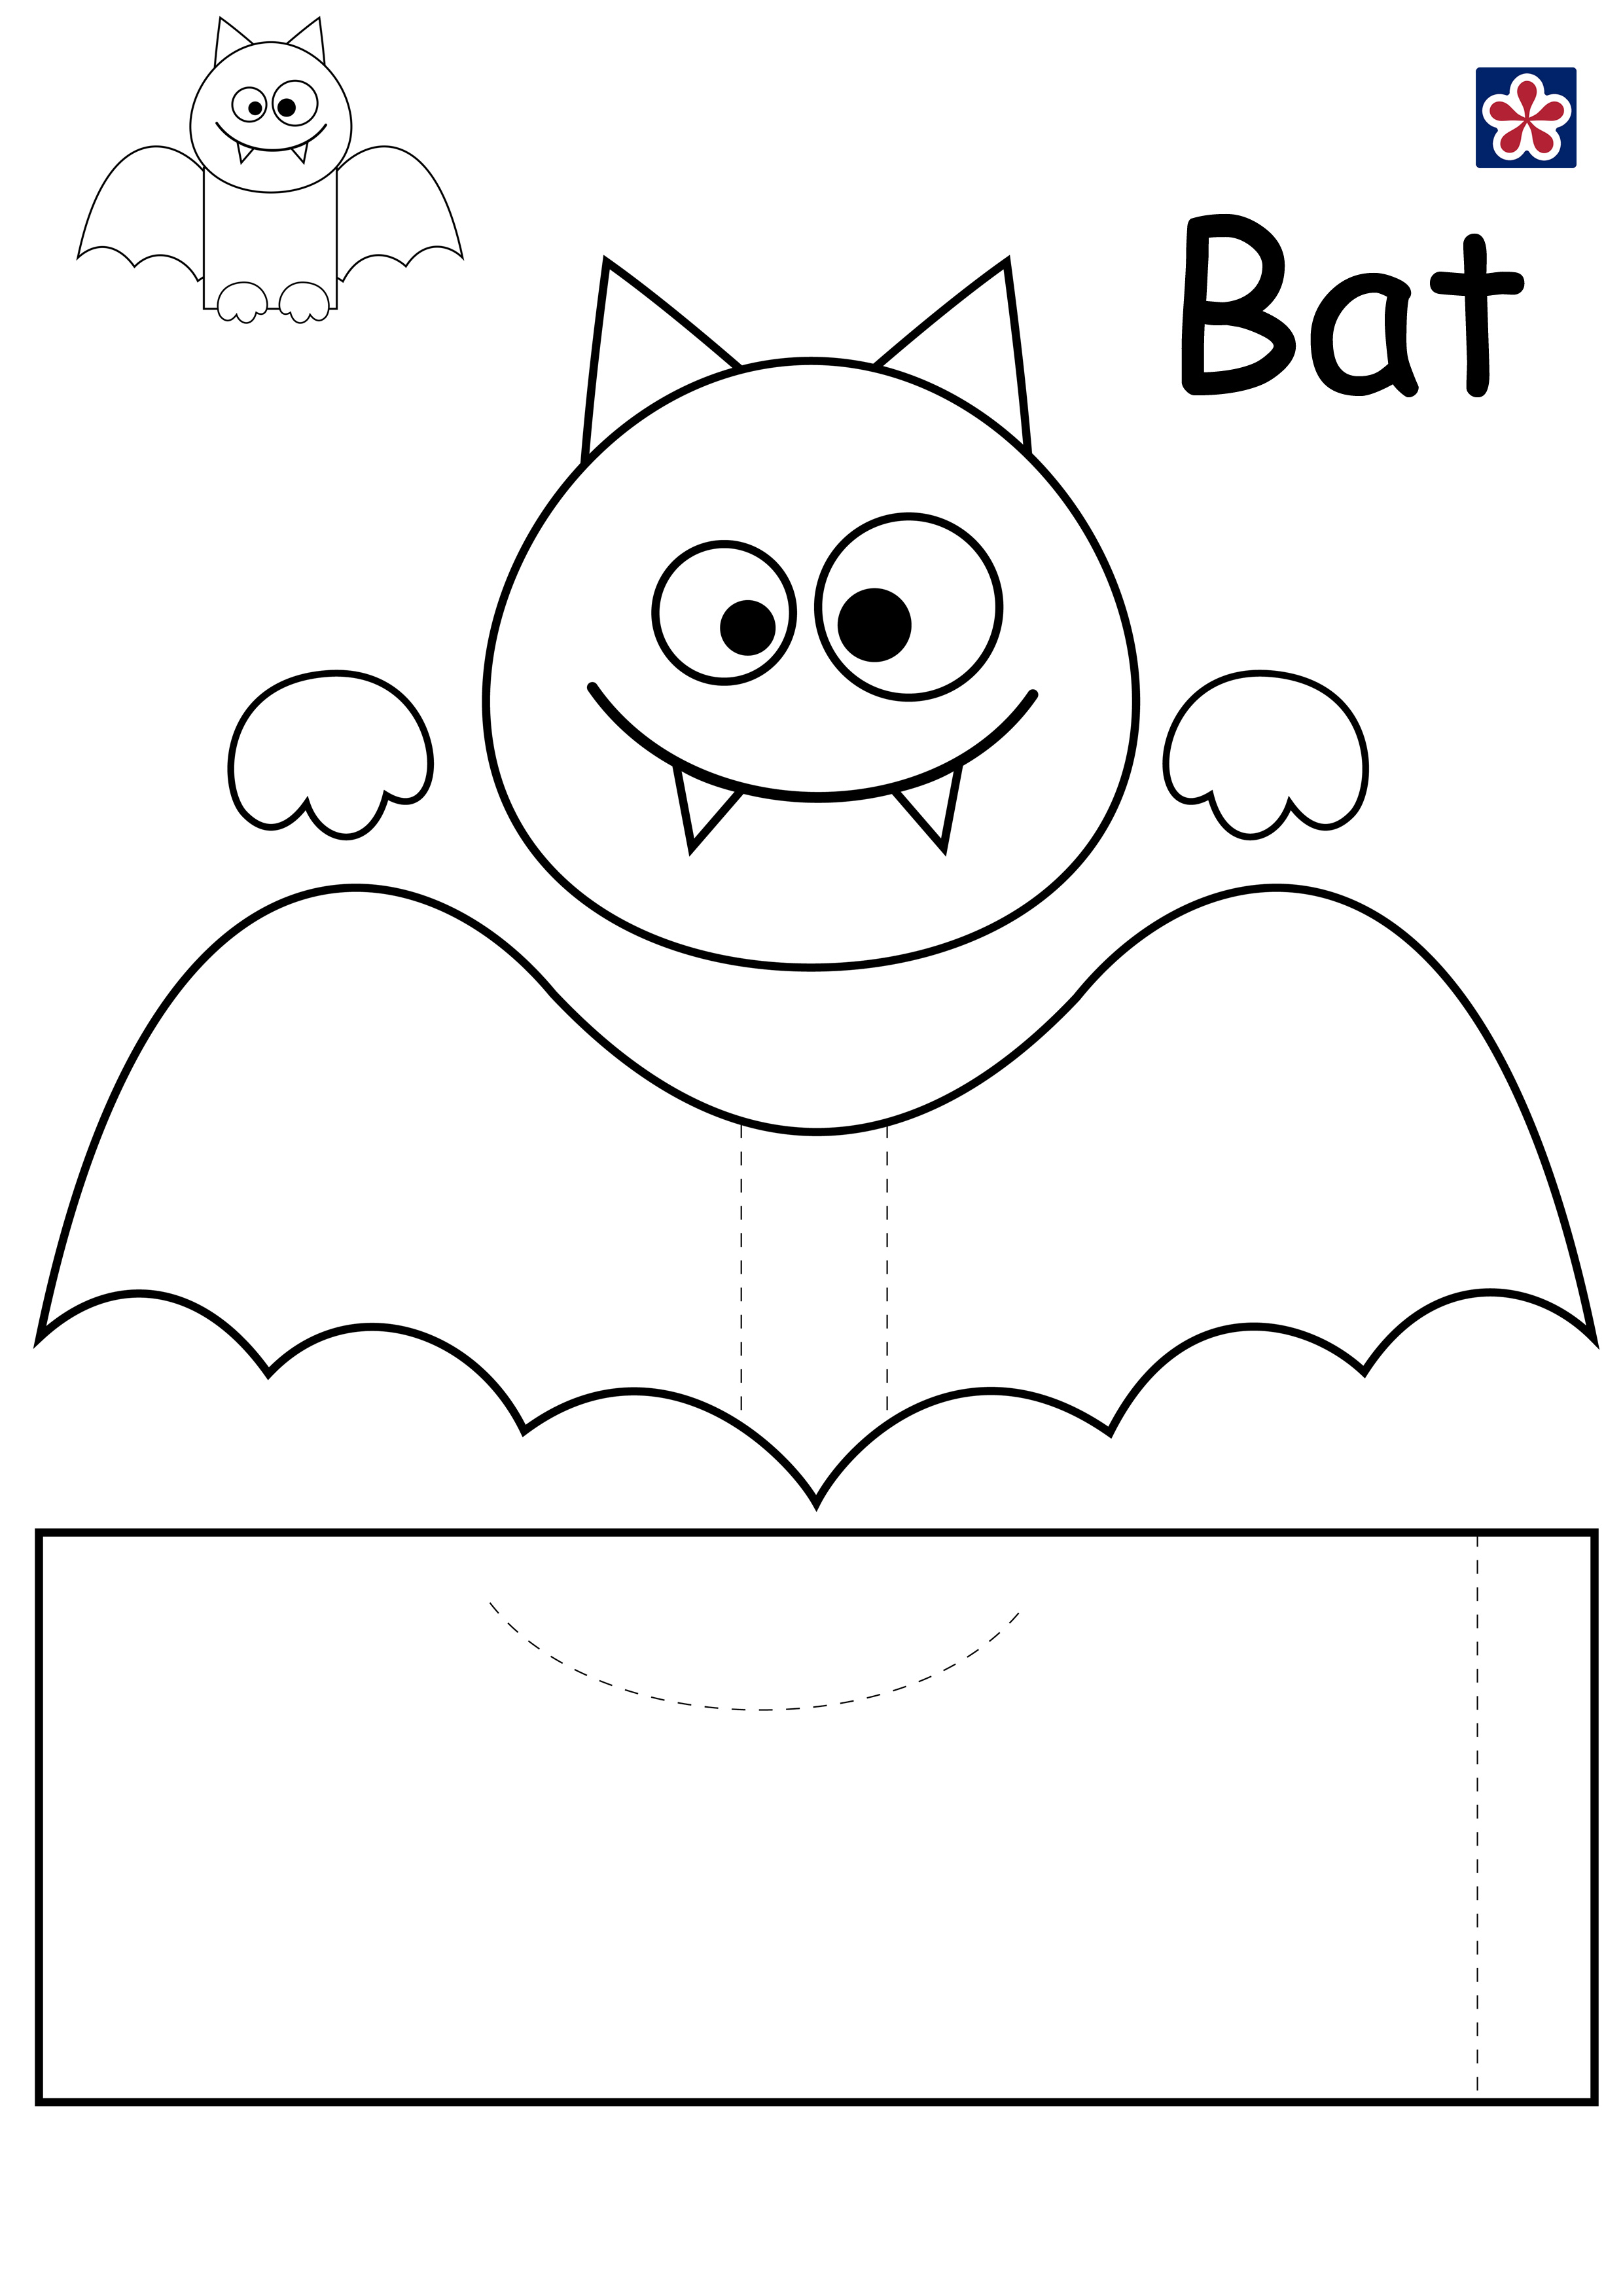 Bat Worksheets TeachersMag com